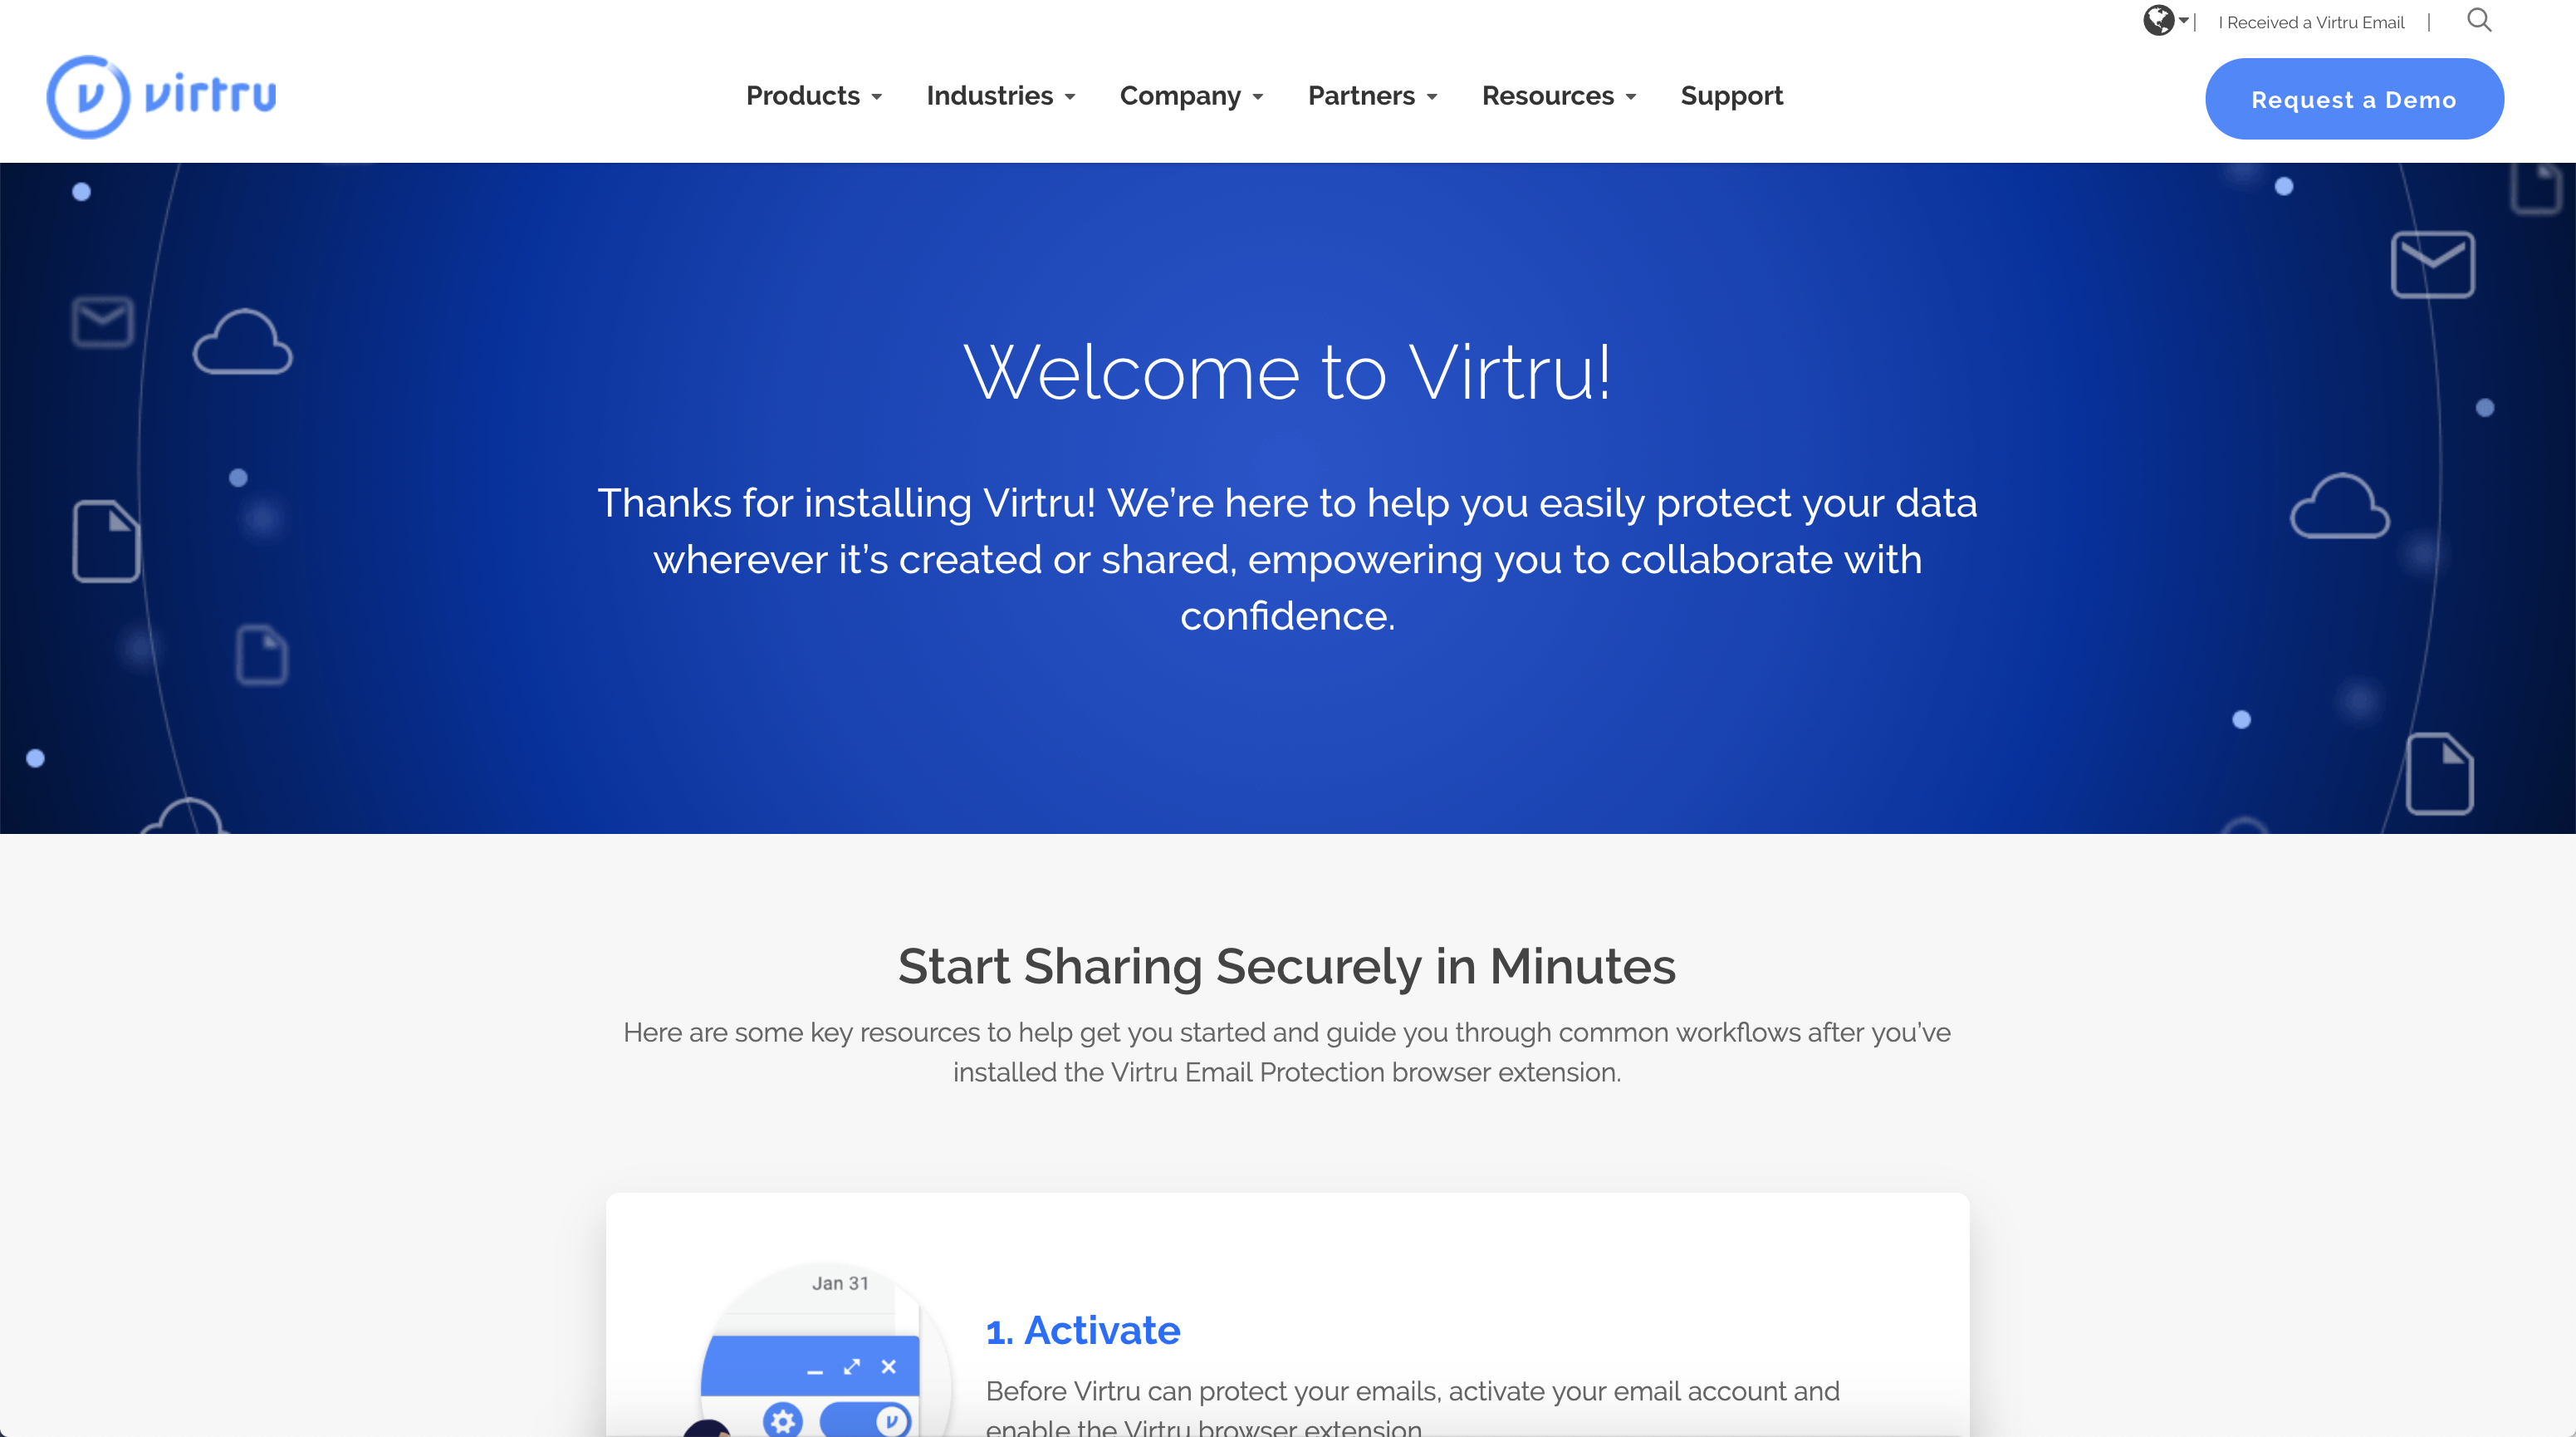 Virtru website welcome page